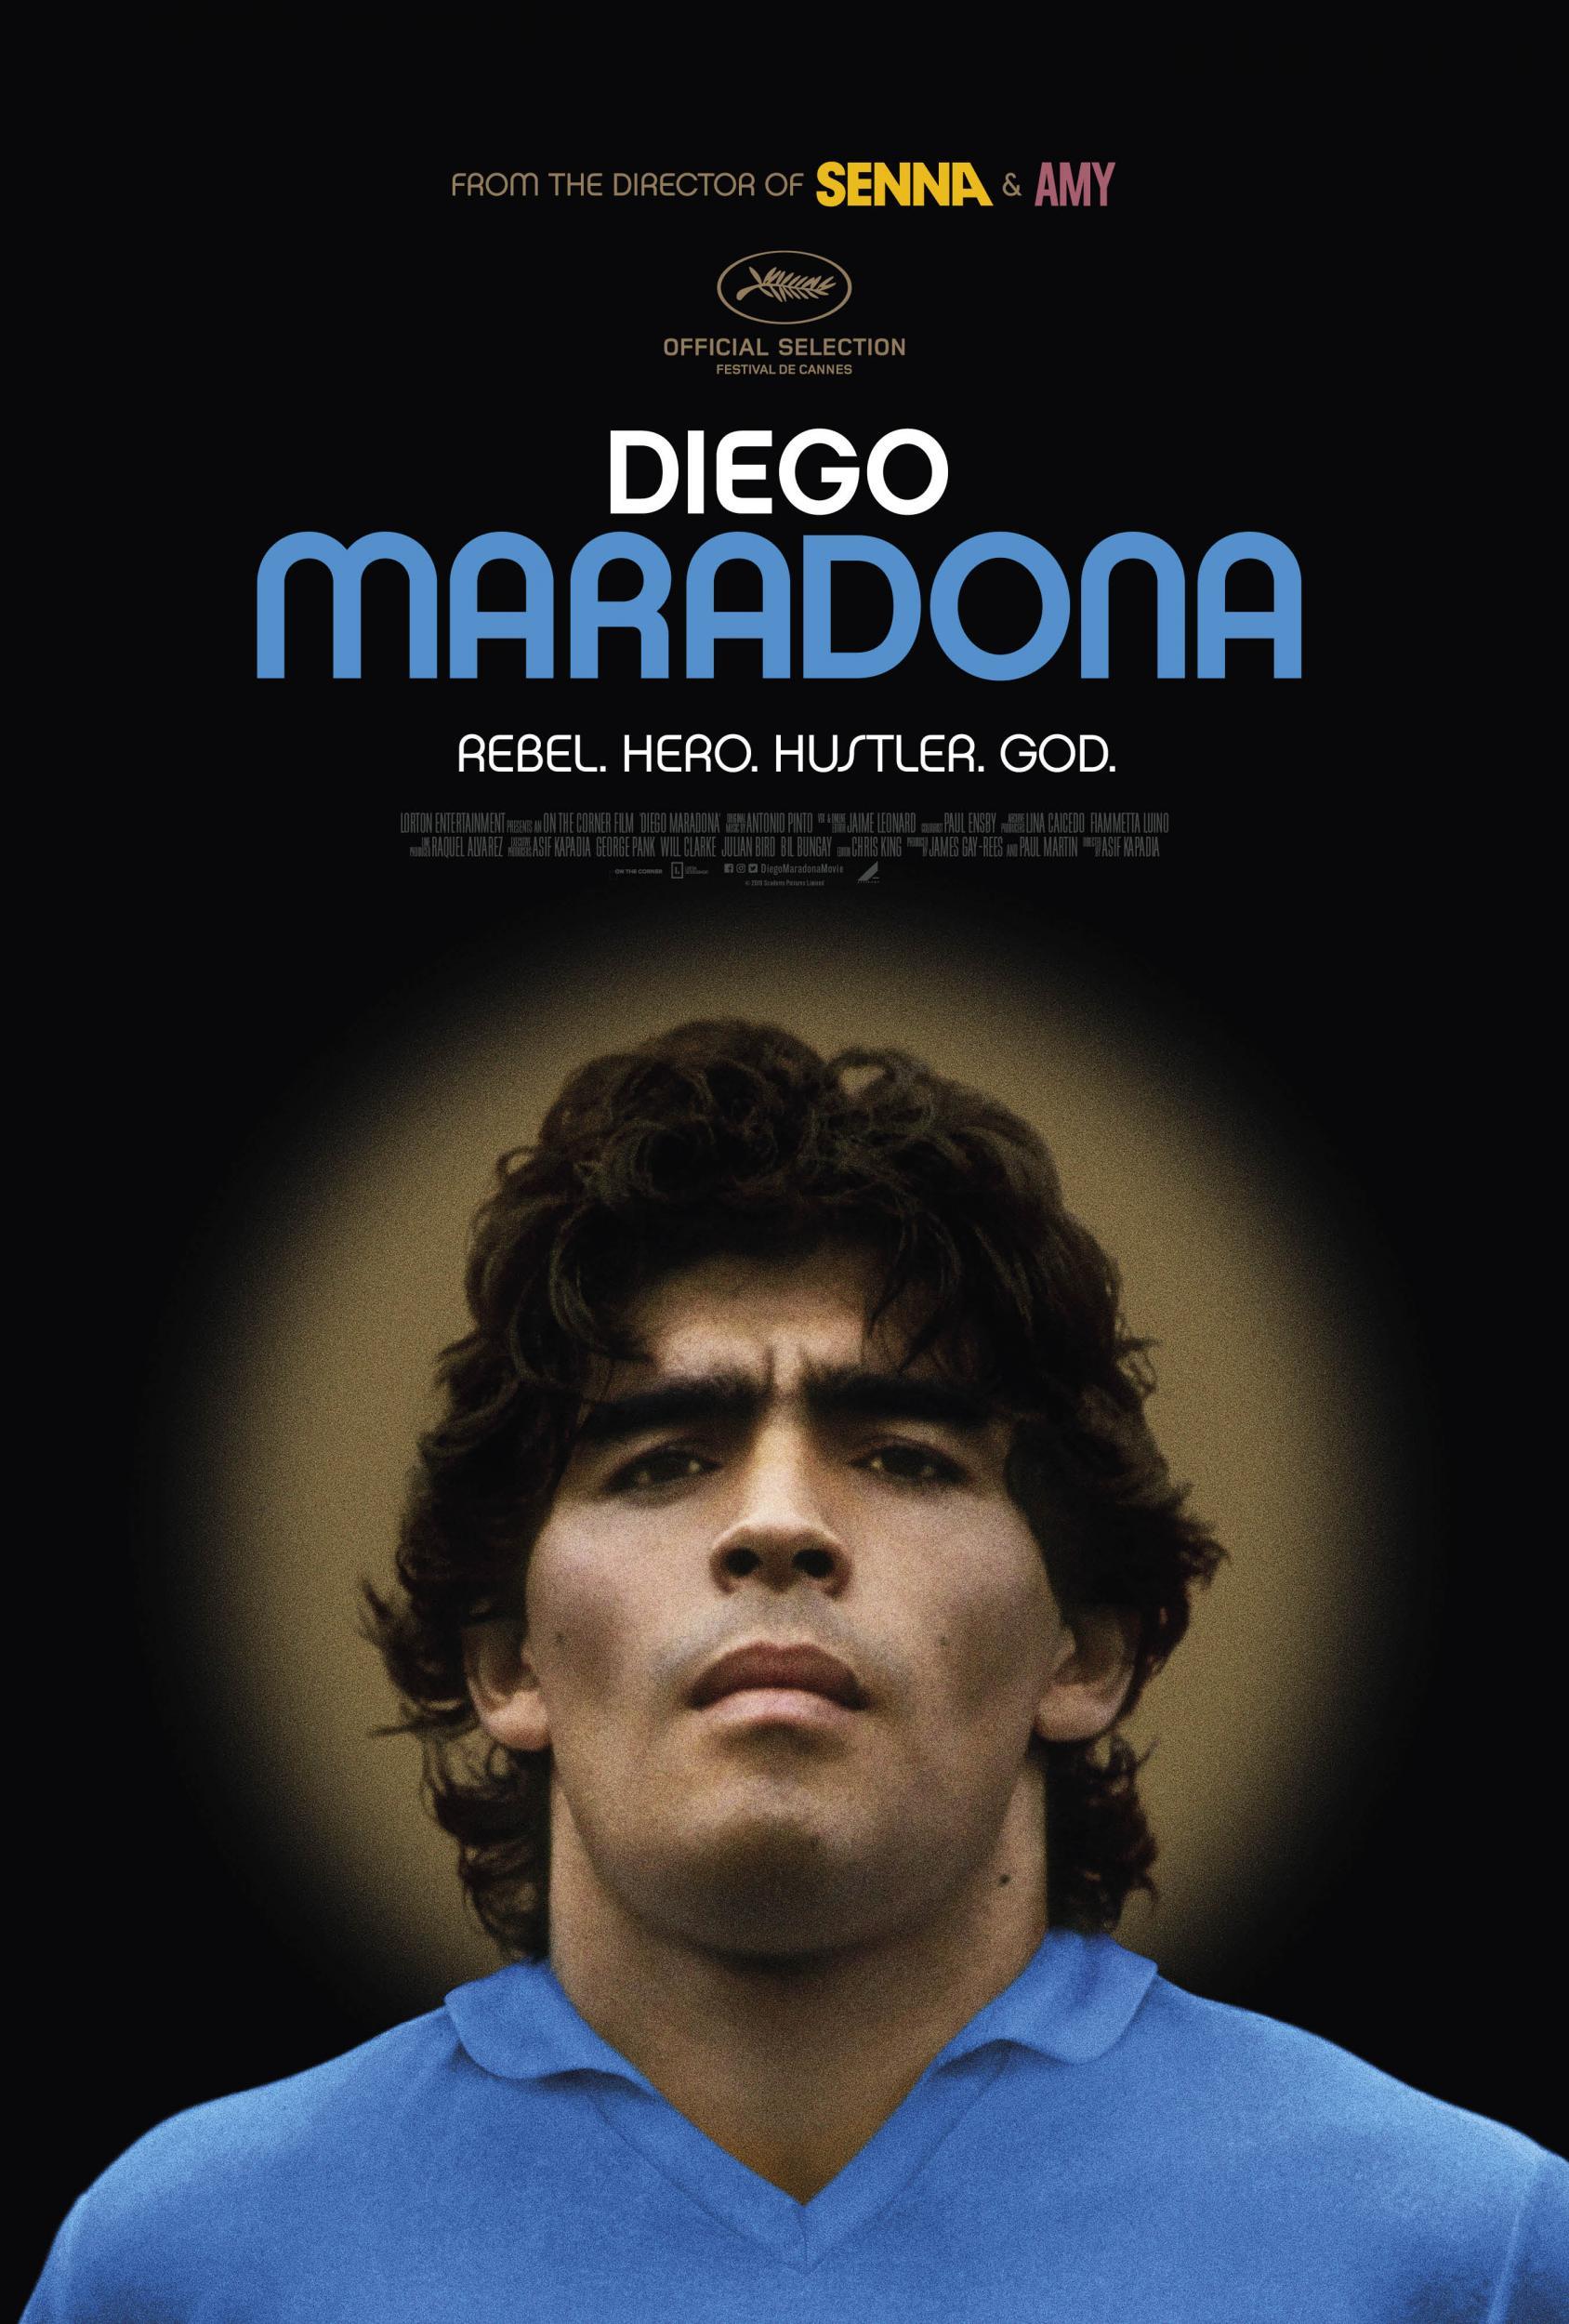 Diego Maradona is in cinemas from 14 June